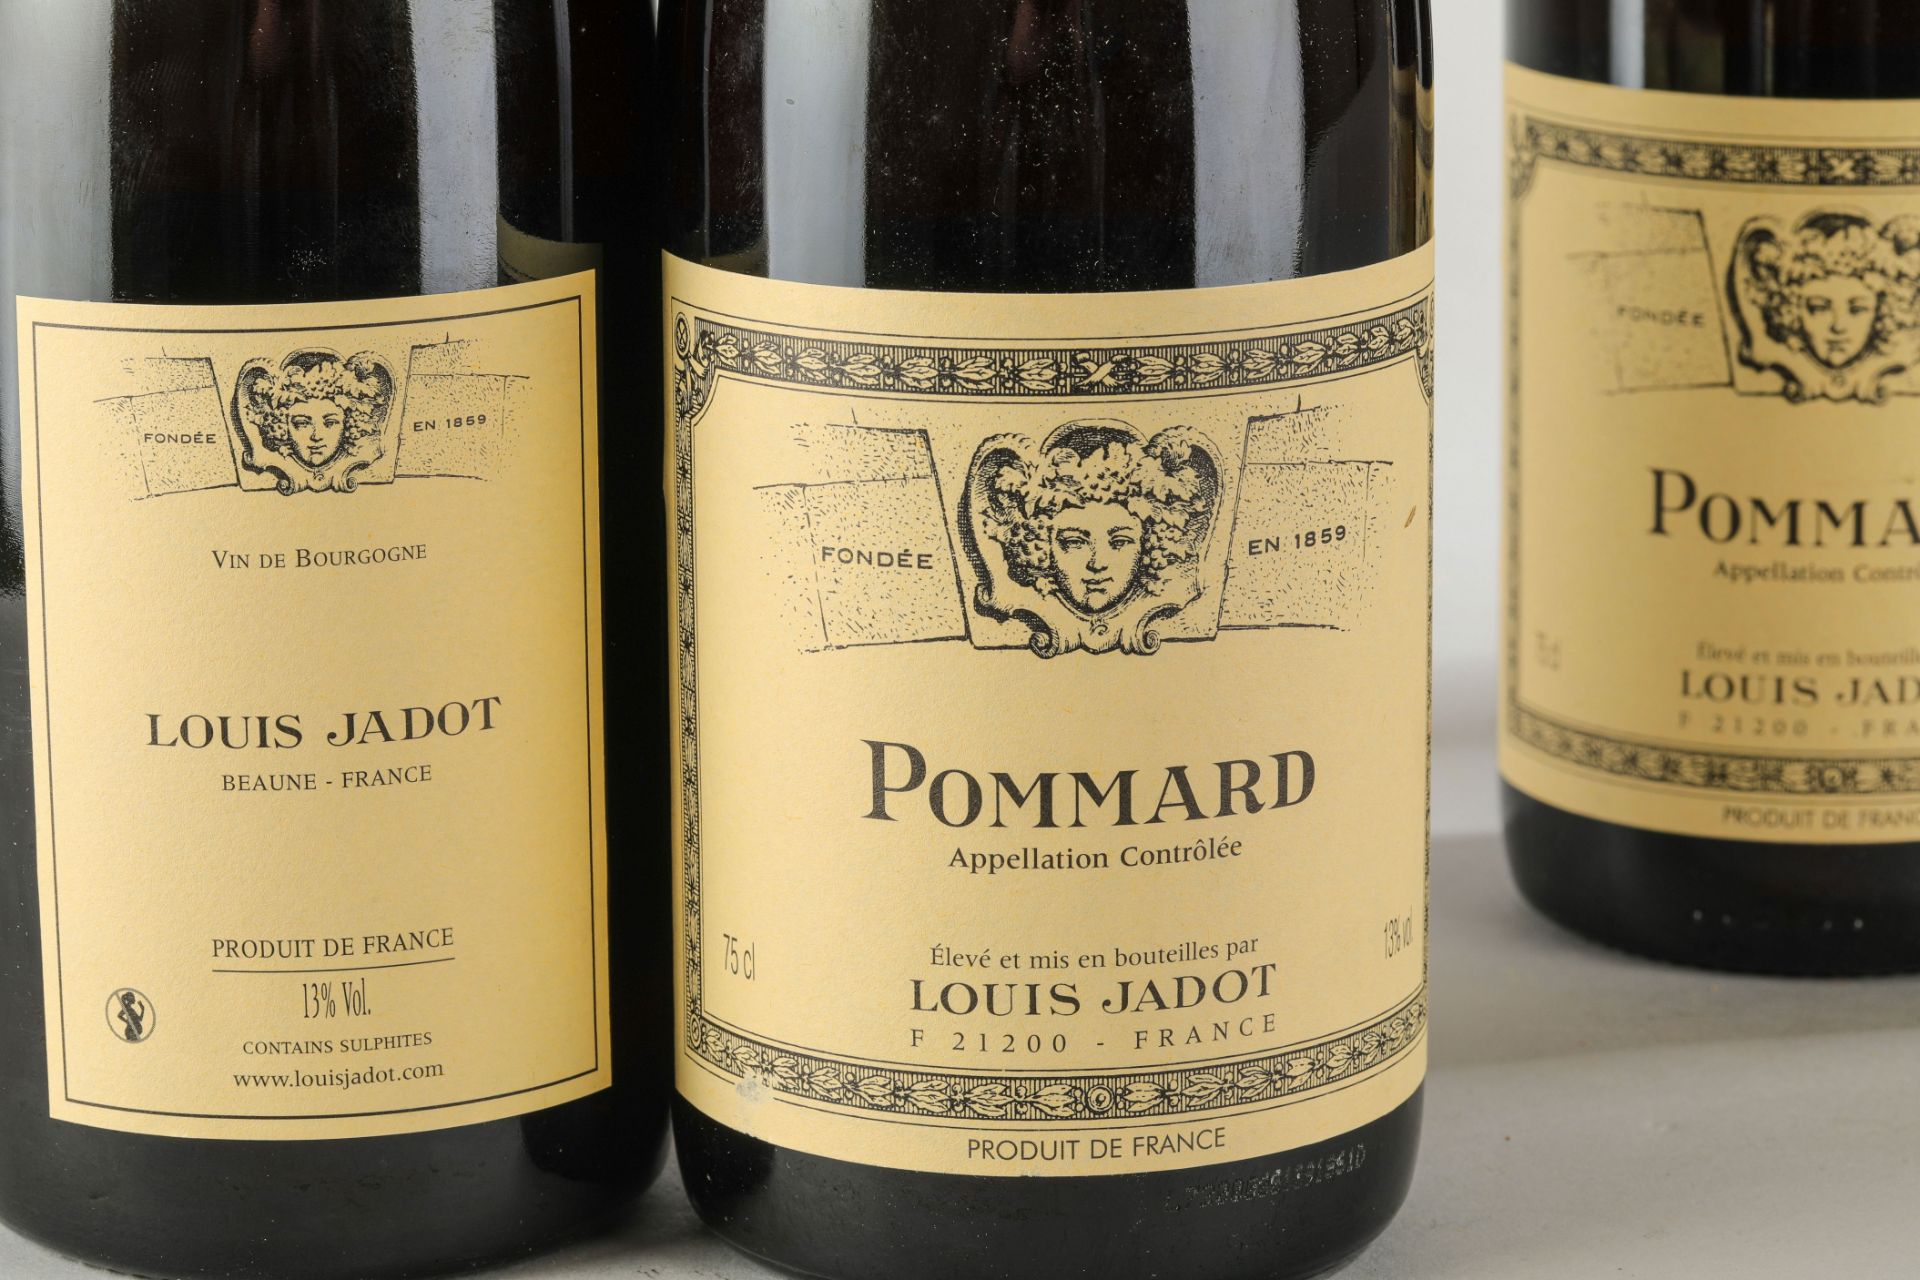 POMMARD 2009 6 bouteilles Louis Jadot - Image 2 of 3